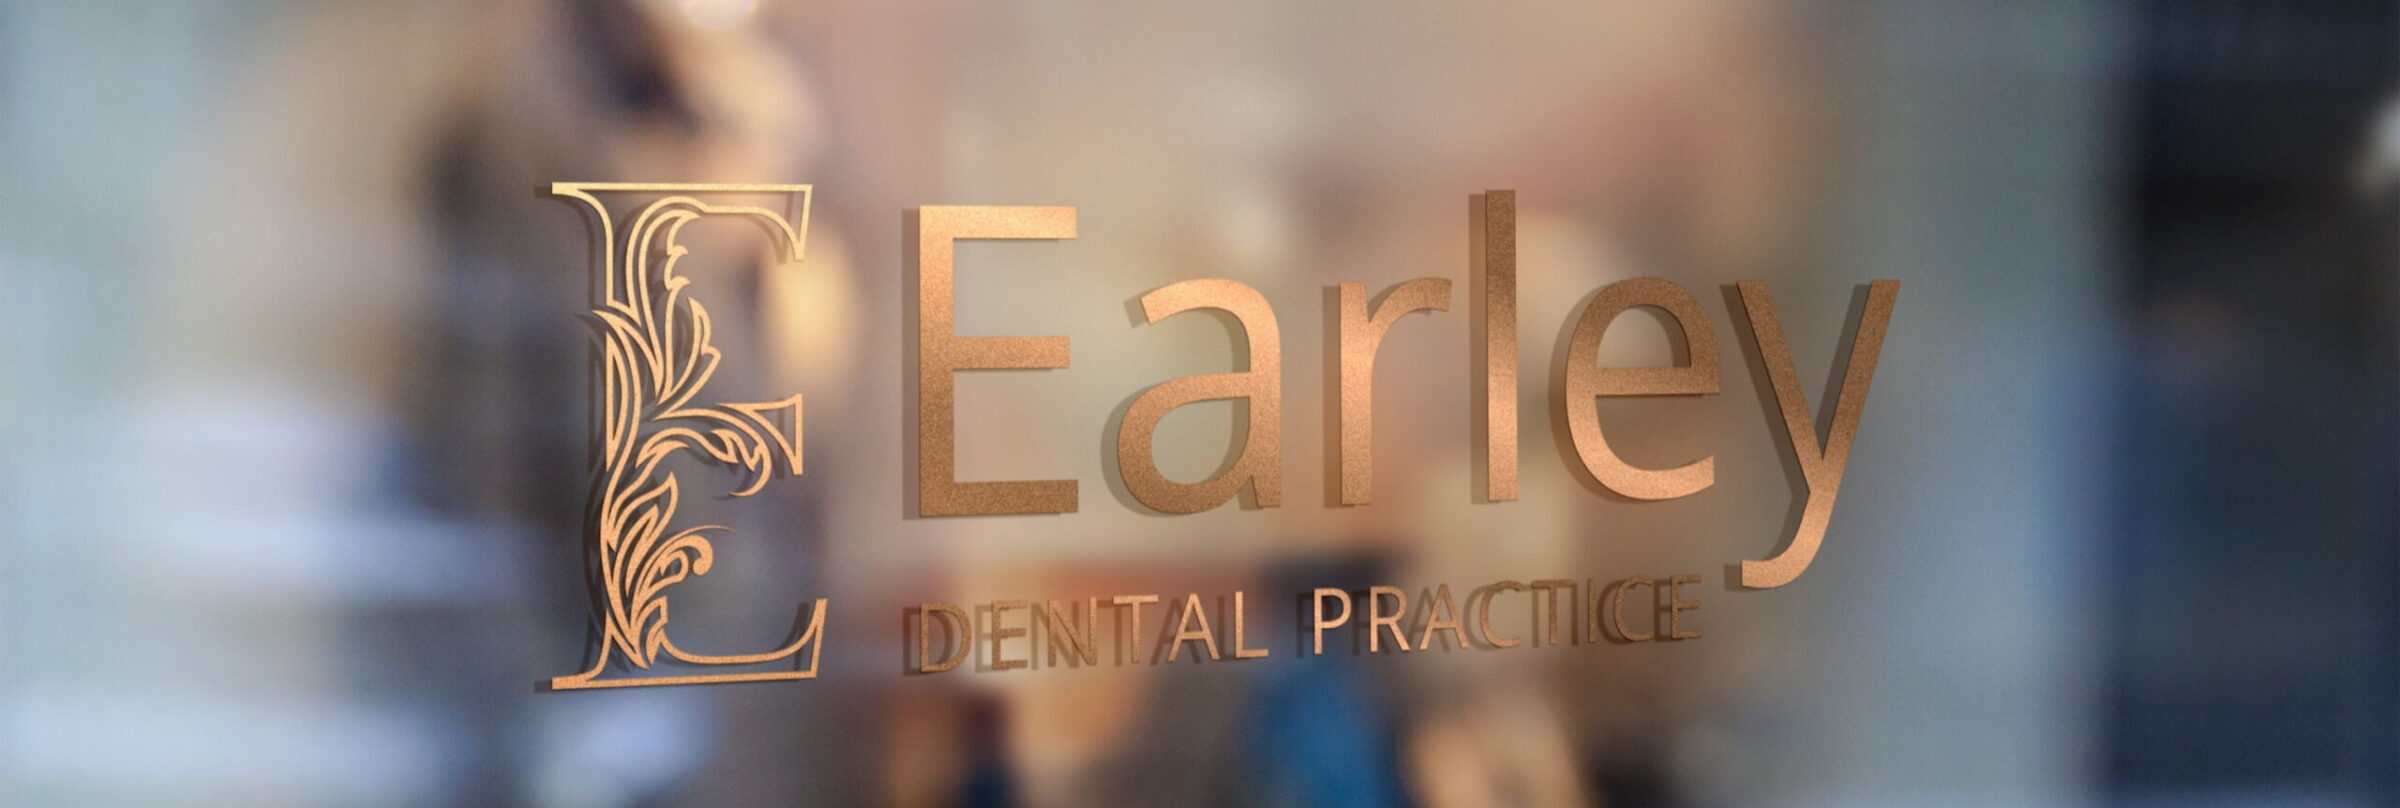 earley dental practice thumb1